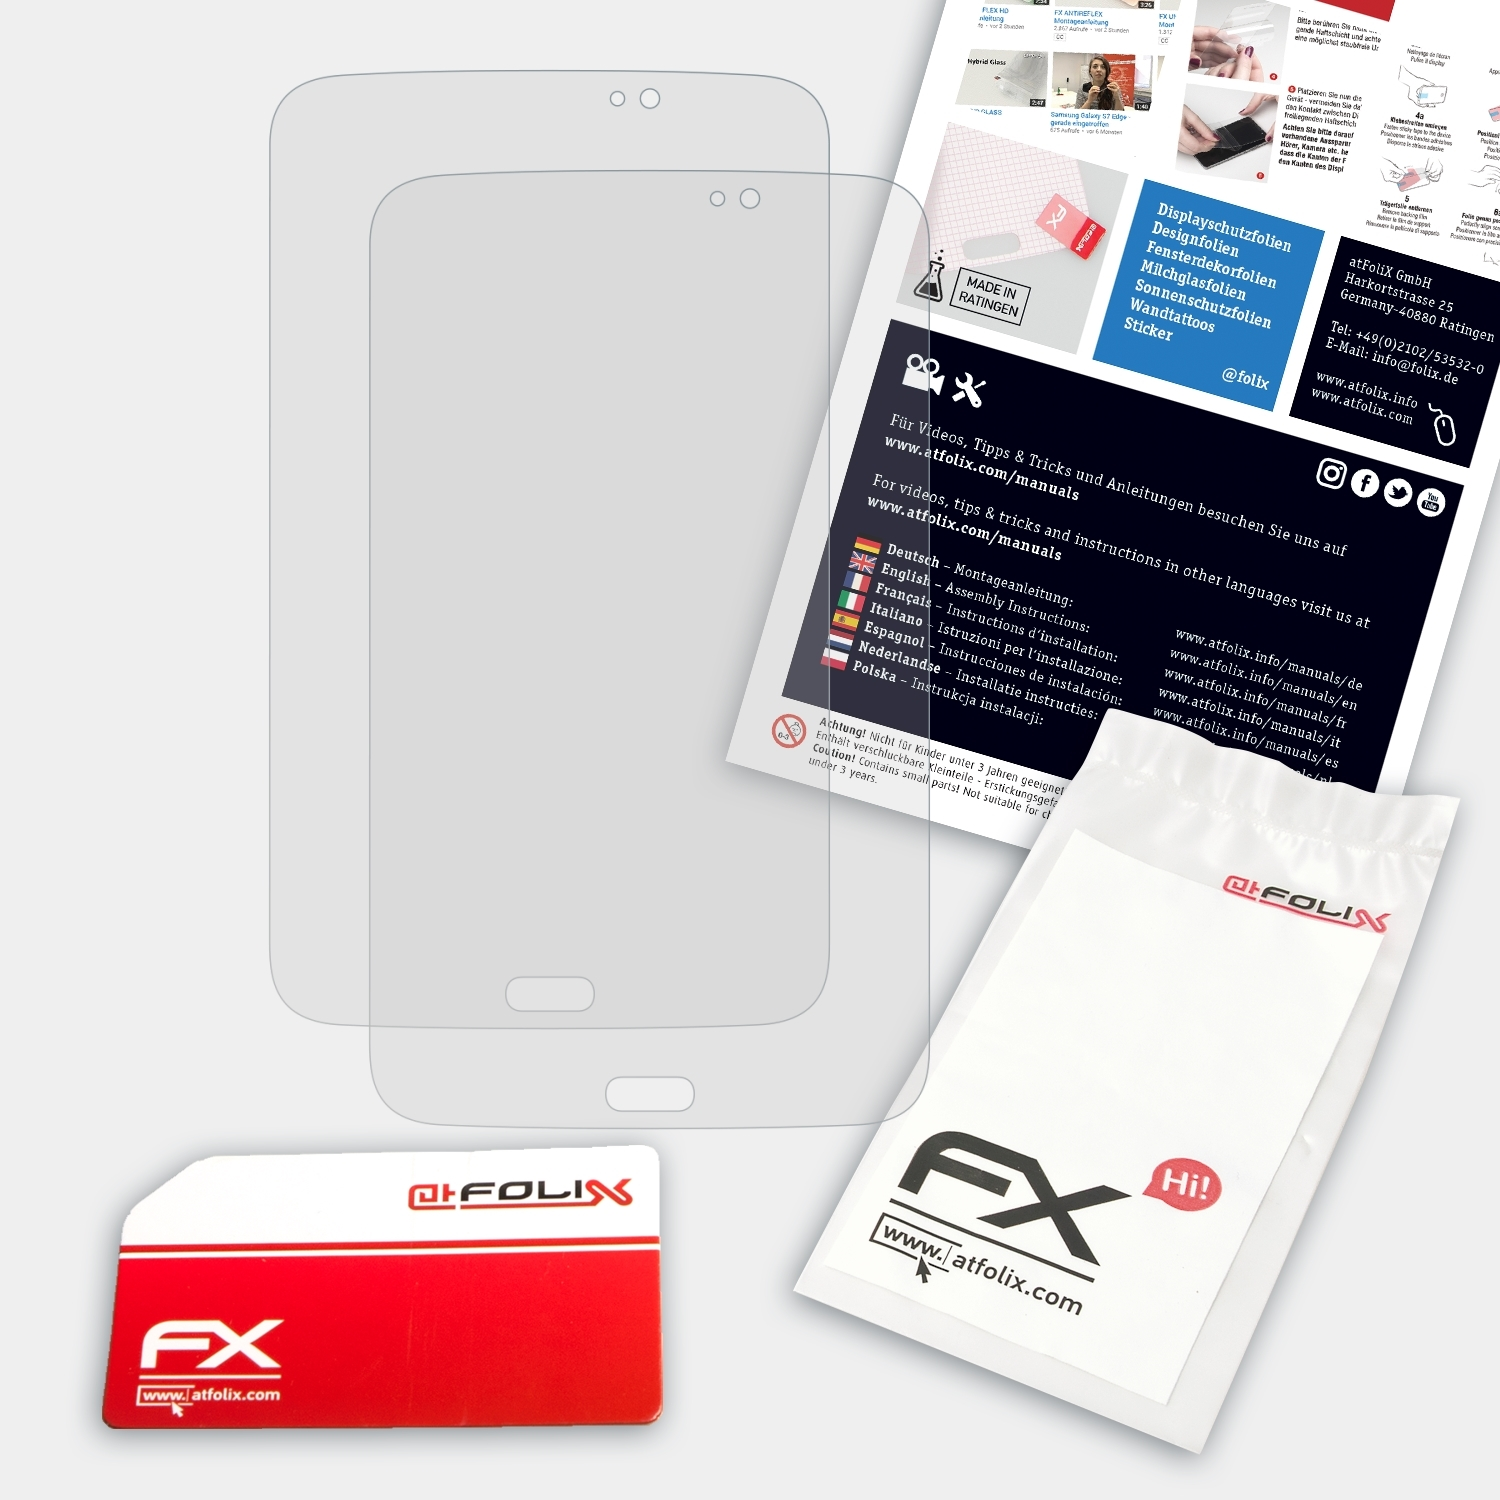 ATFOLIX 2x FX-Antireflex Displayschutz(für Samsung SM-T2100)) Galaxy Tab 7.0 3 (WiFi